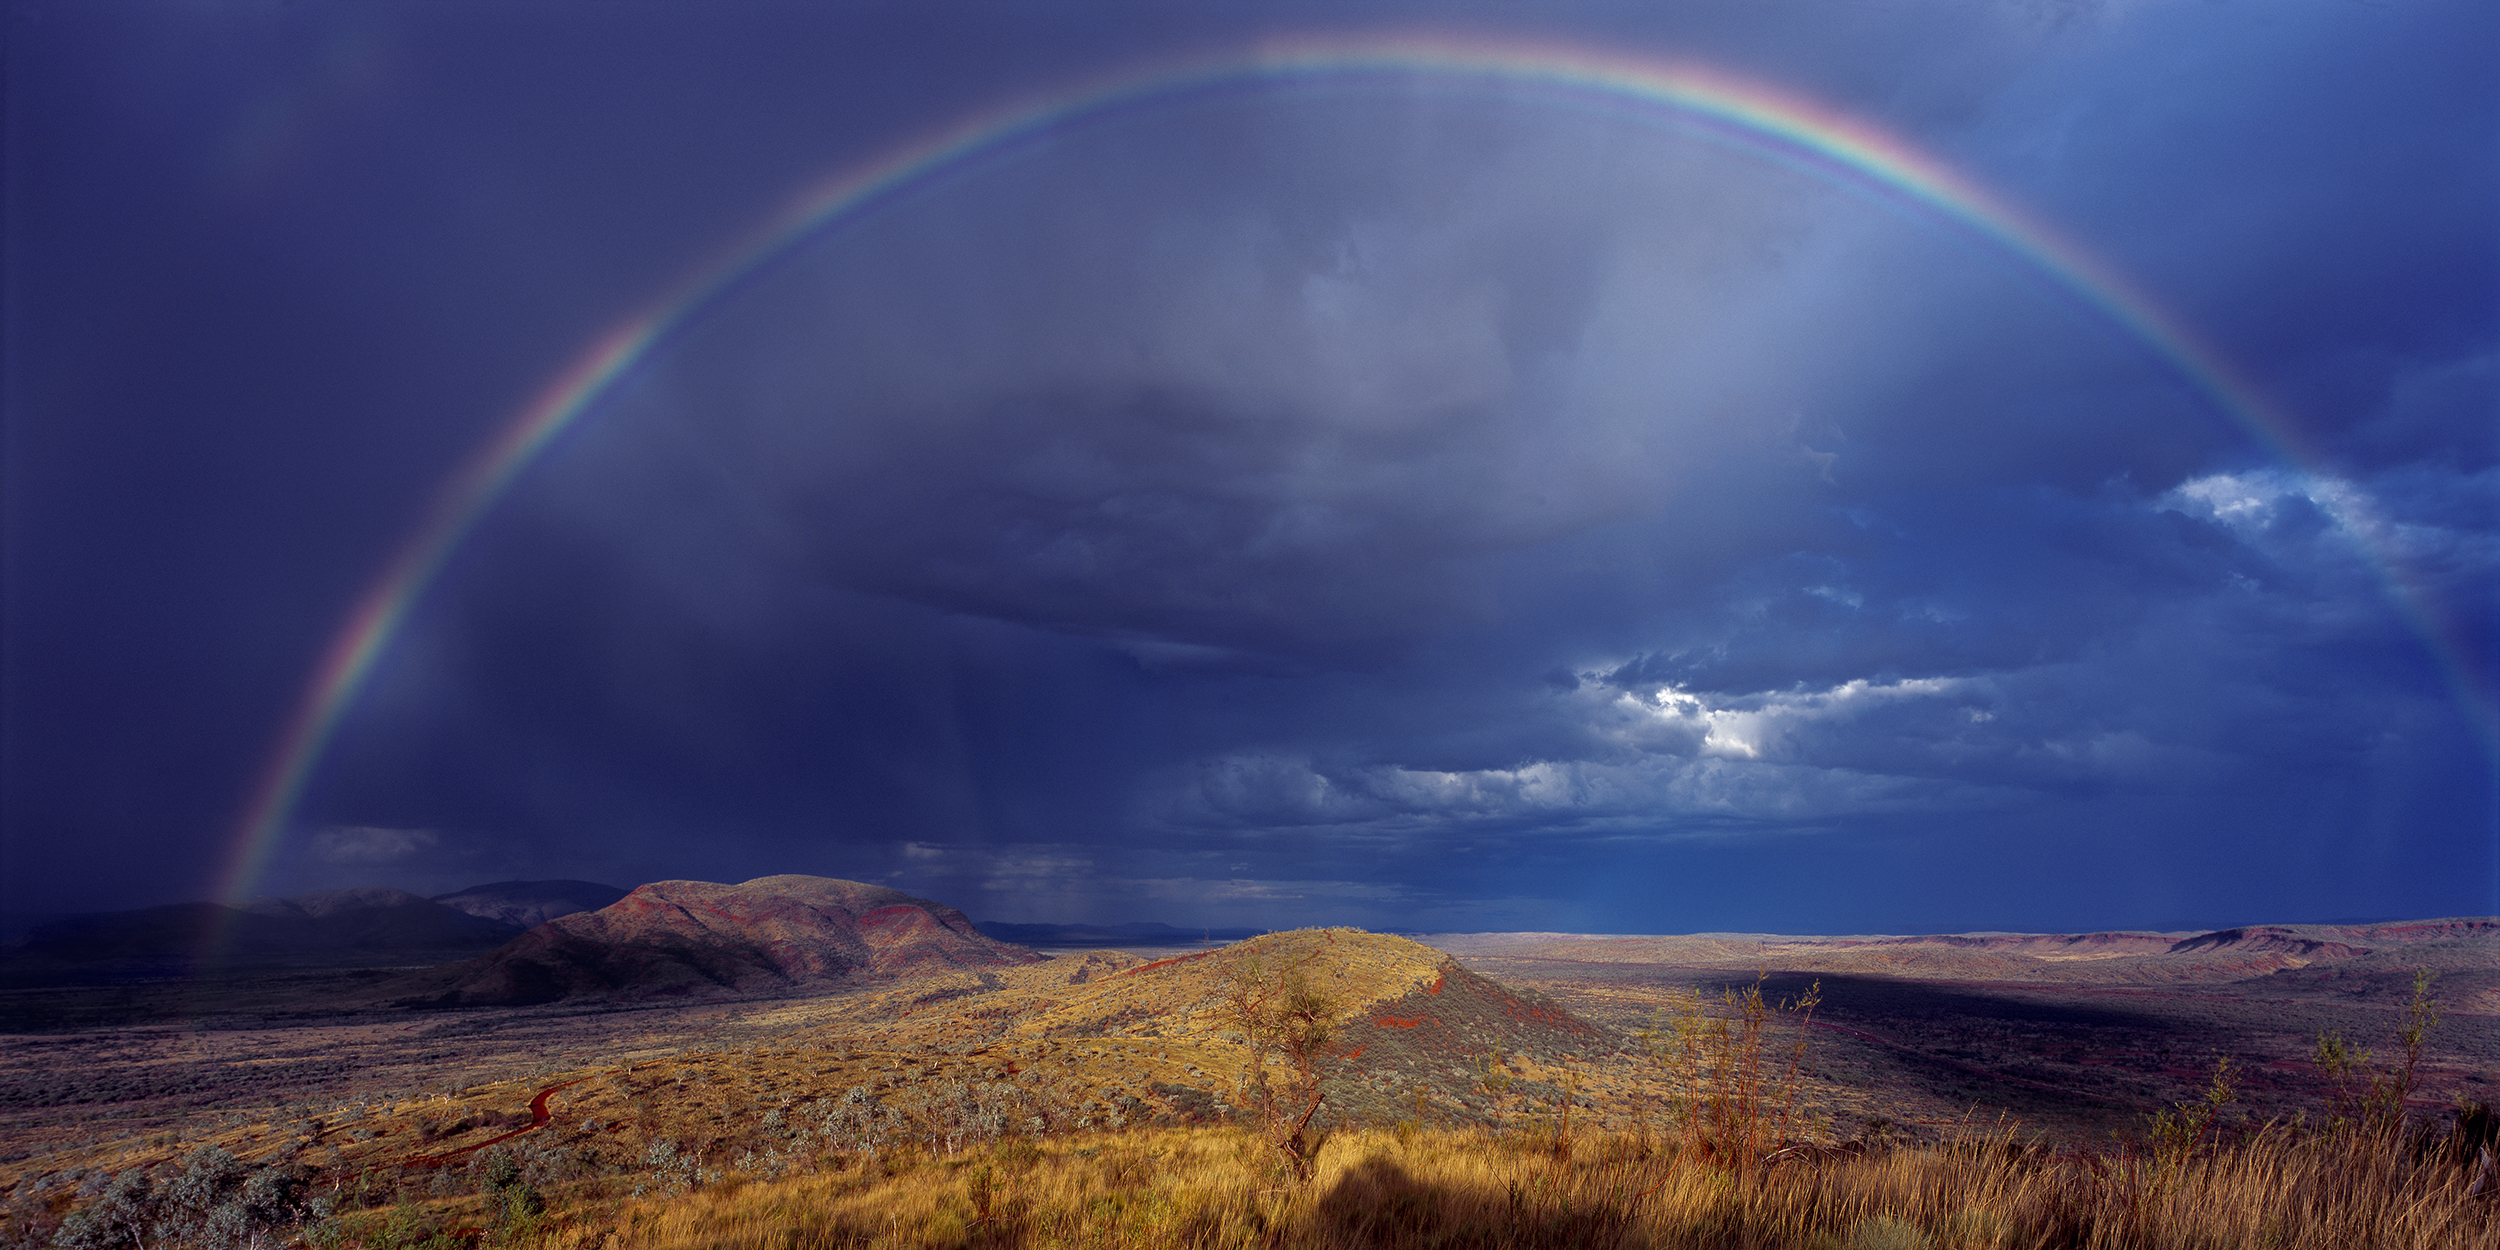  Closing Rainbow, The Governor, Pilbara, Western Australia, 2013.&nbsp; Edition of 3. 